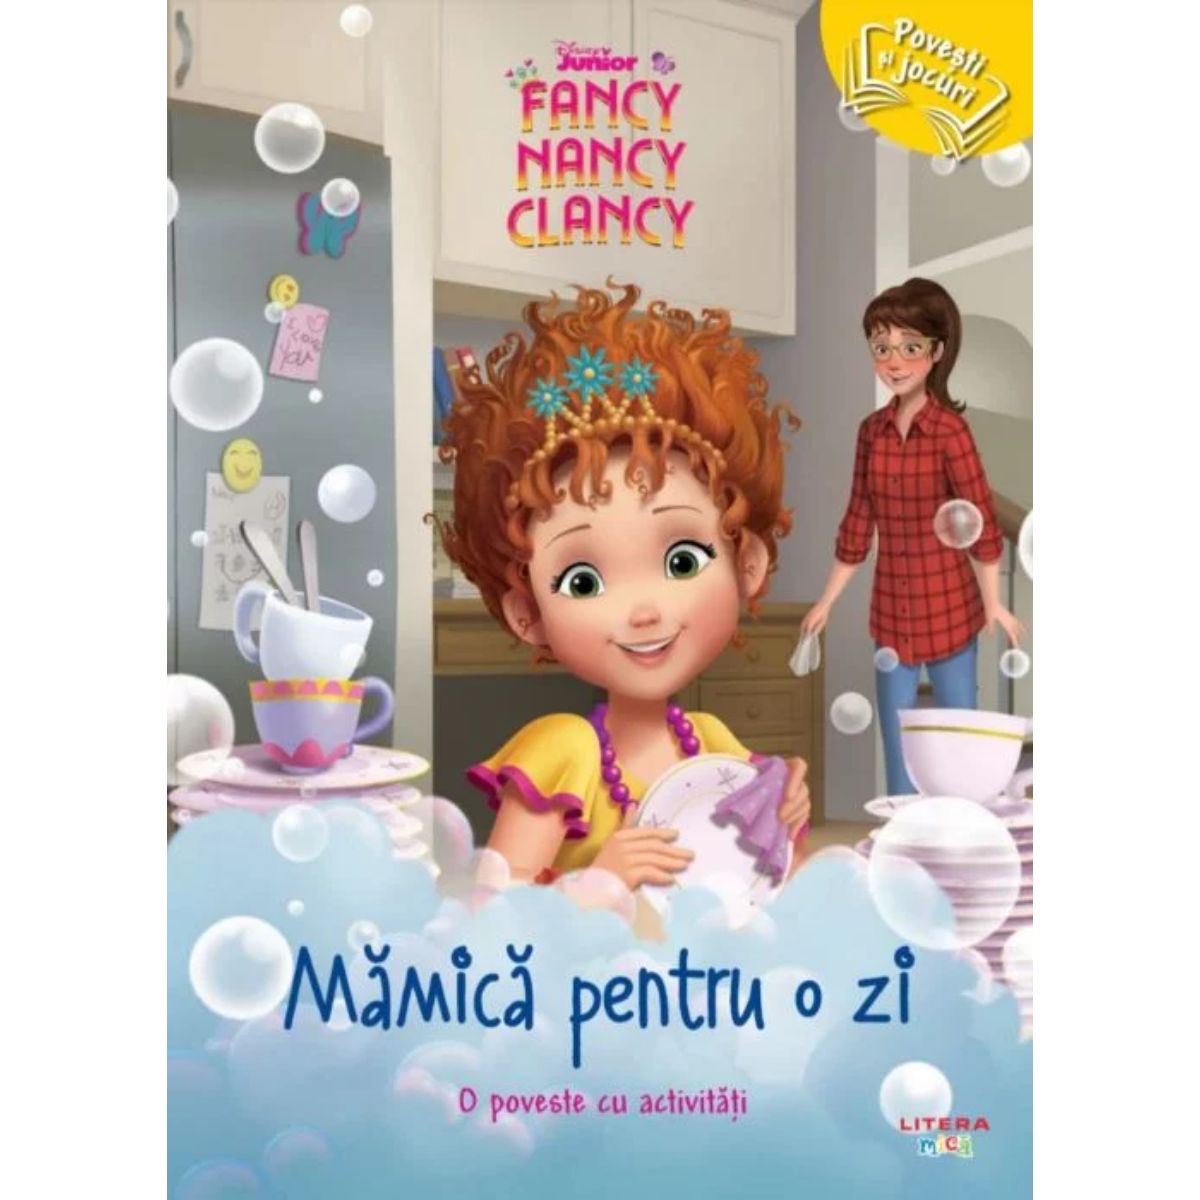 Poze Disney Junior Fancy Nancy Clancy, Mamica pentru o zi